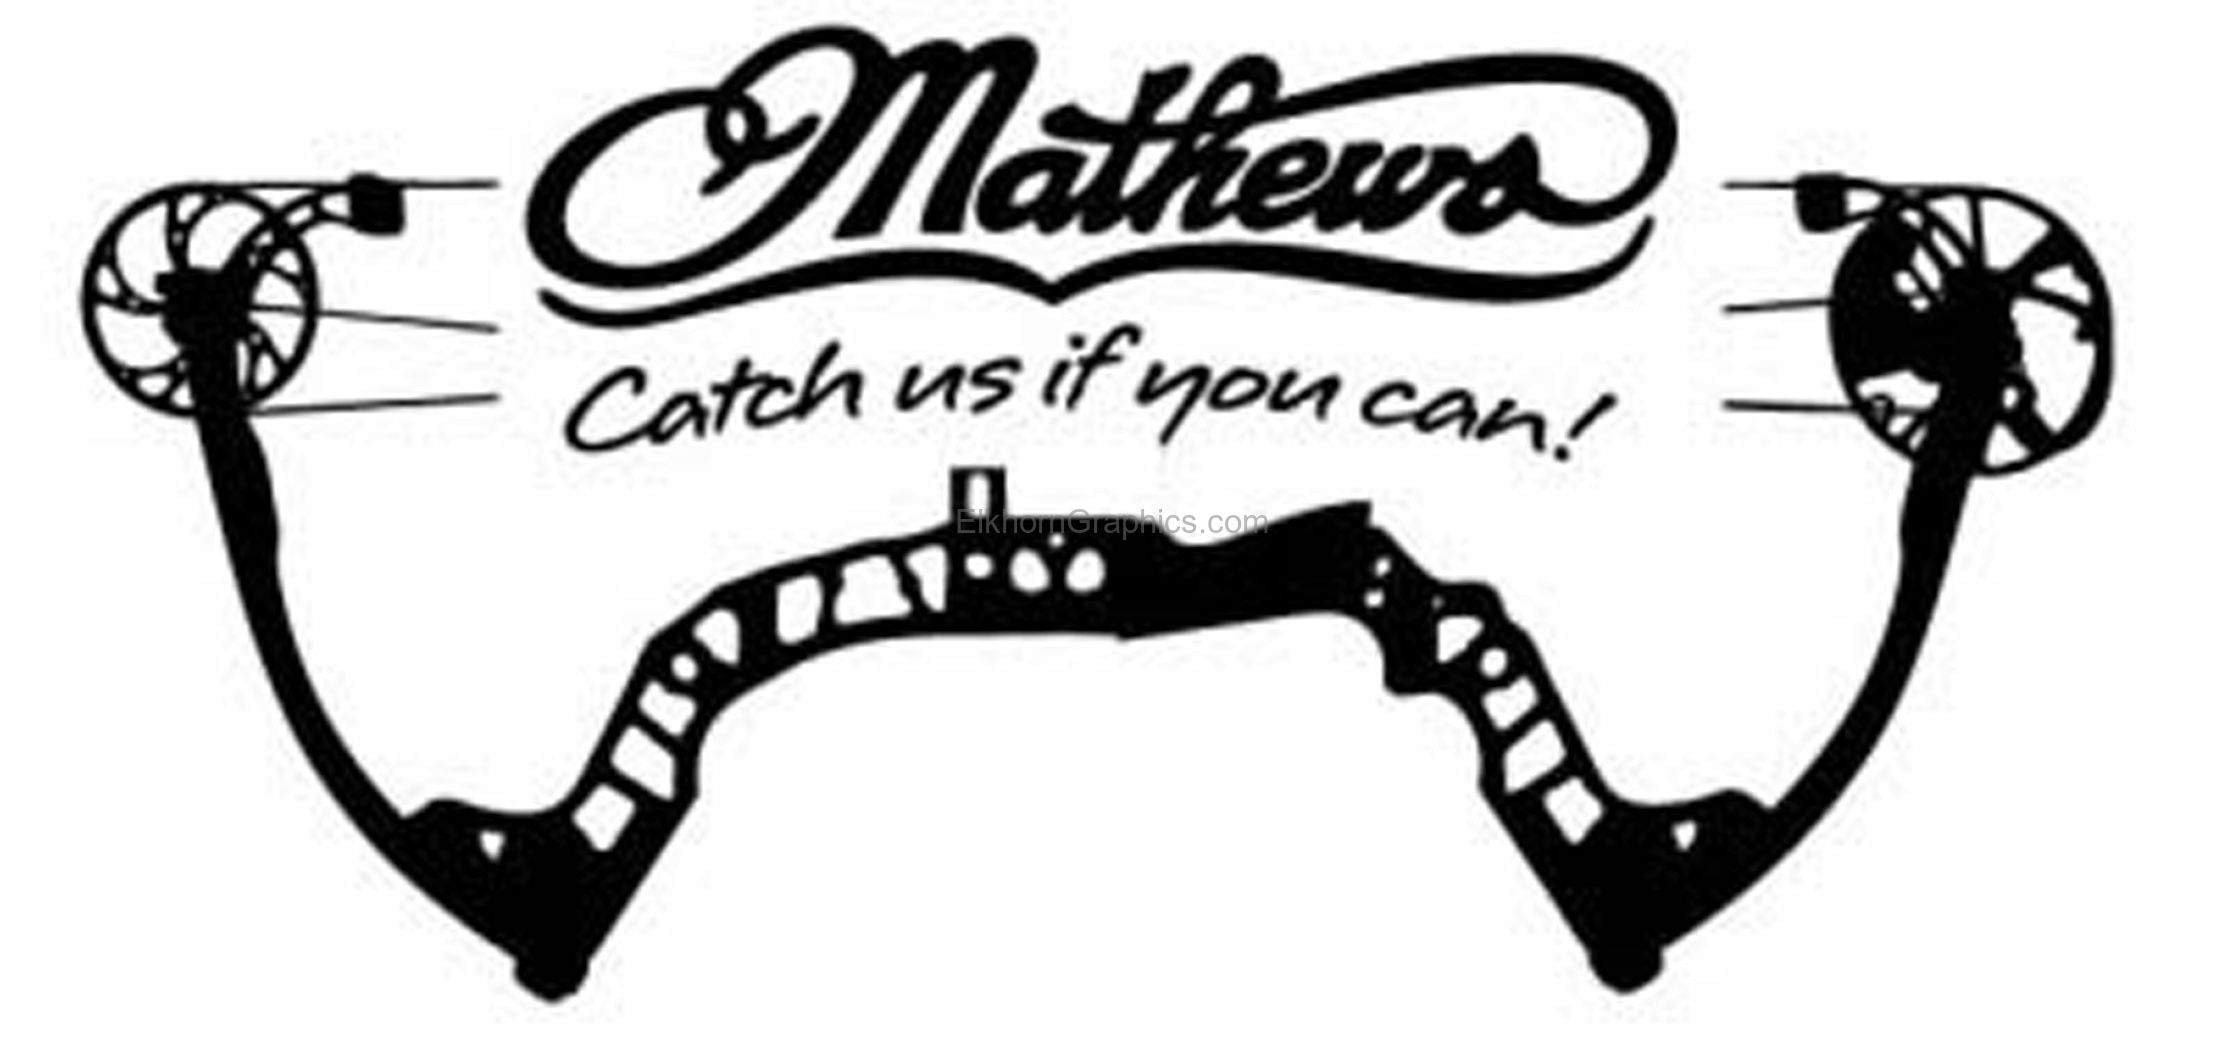 mathews bows clip art